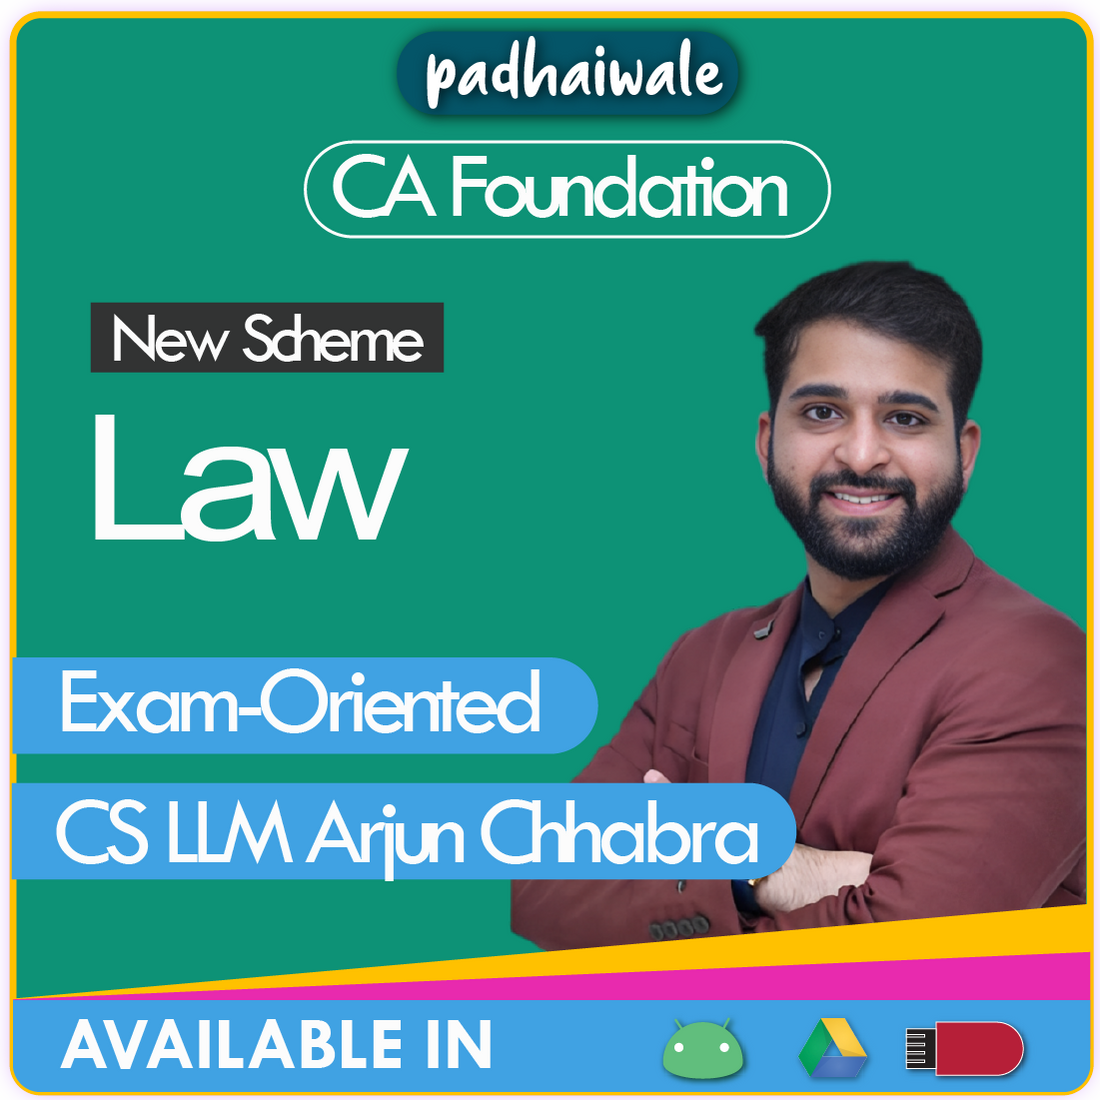 CA Foundation Law Exam-Oriented New Scheme Arjun Chhabra